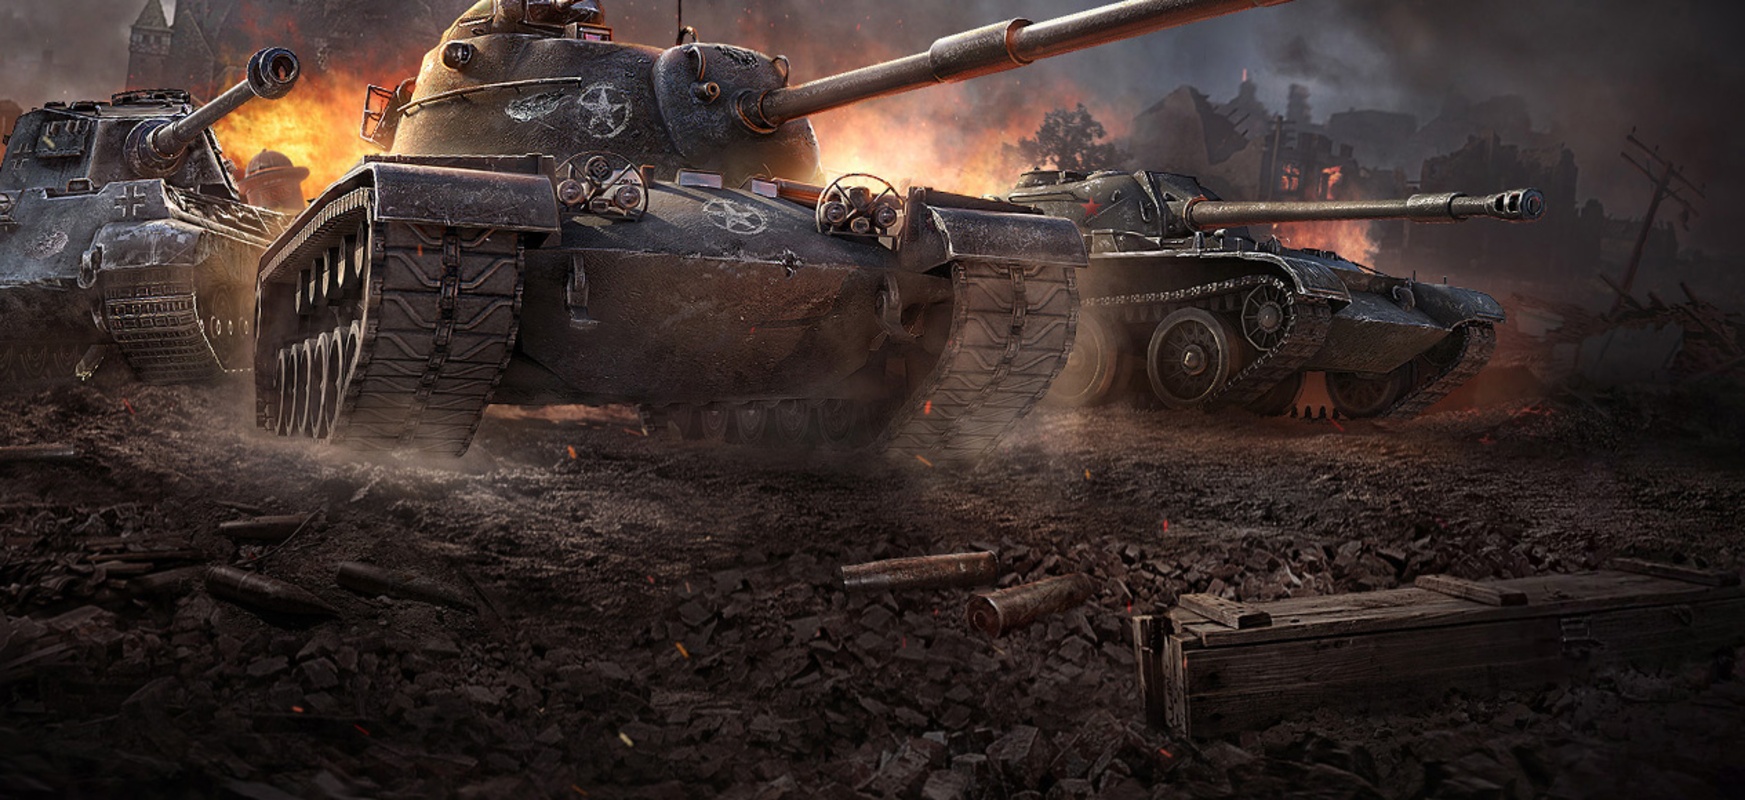 World of Tanks Blitz 3D online 9.8.0.690 APK feature